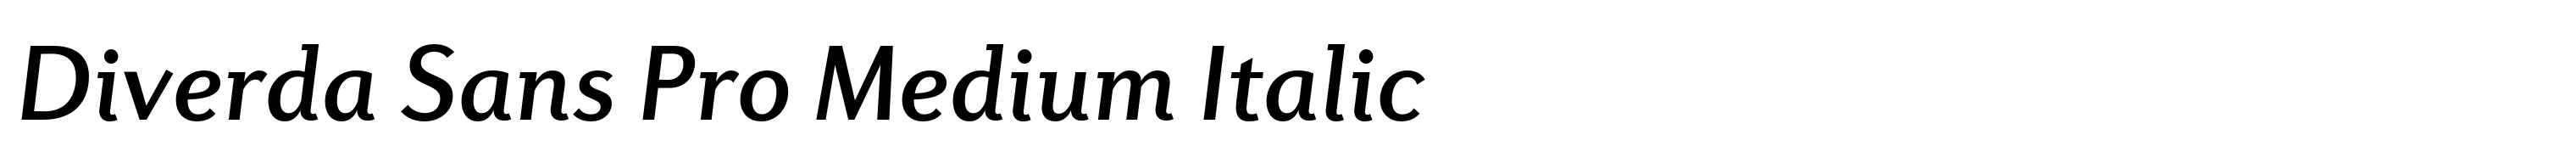 Diverda Sans Pro Medium Italic